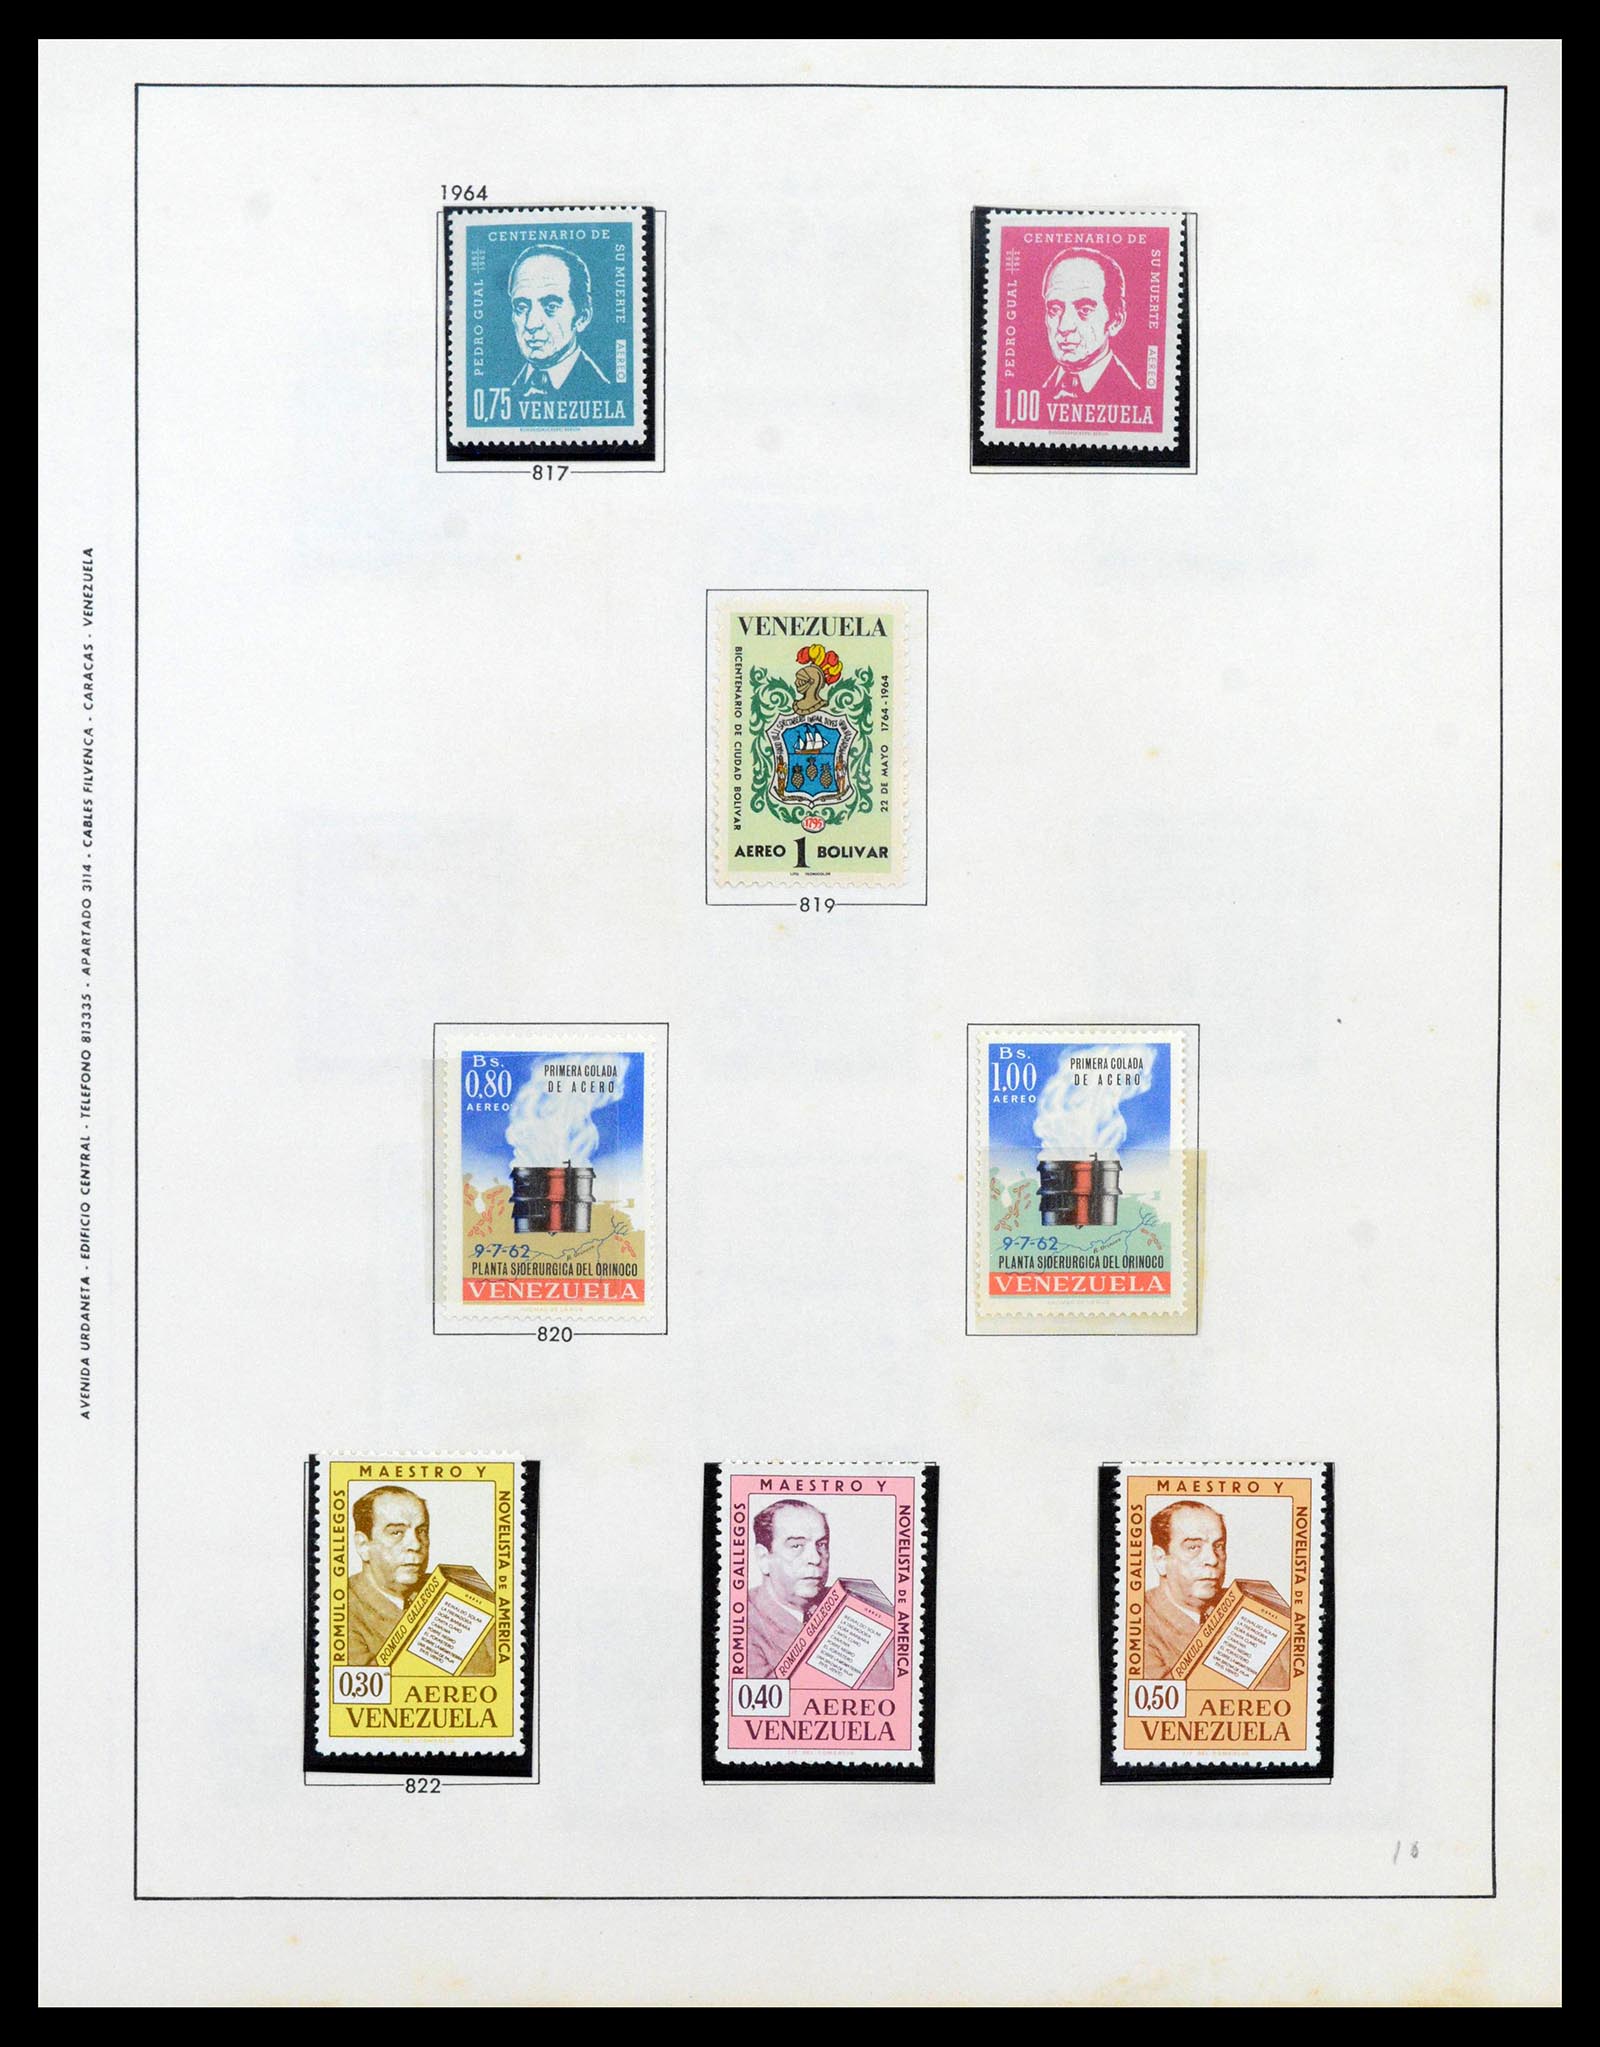 39436 0054 - Stamp collection 39436 Venezuela 1859-1985.